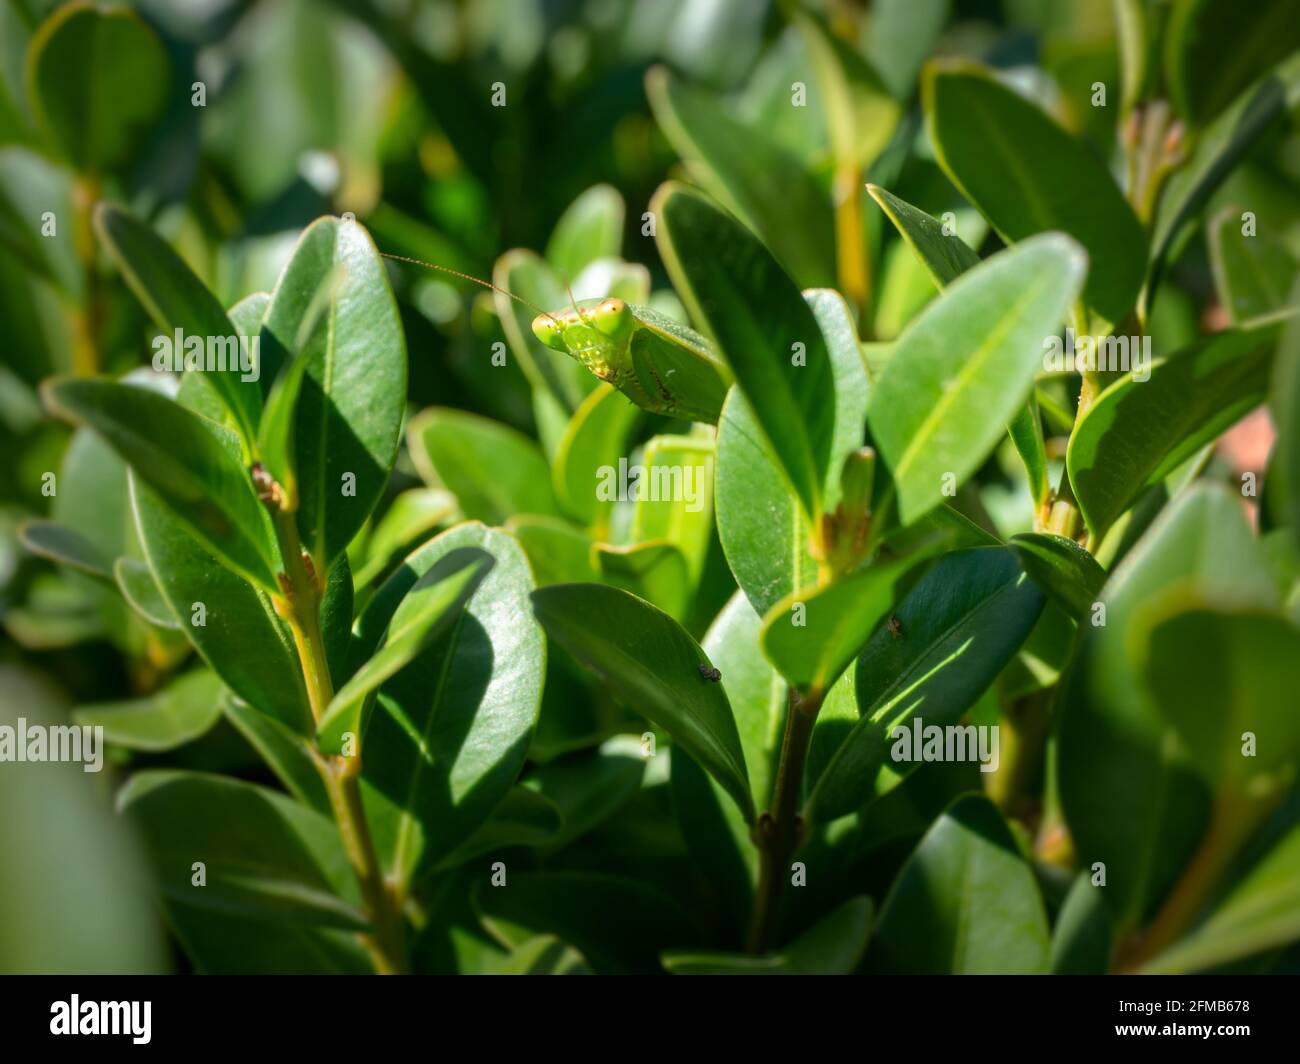 Preying Mantis camoflaged on a green bush Stock Photo